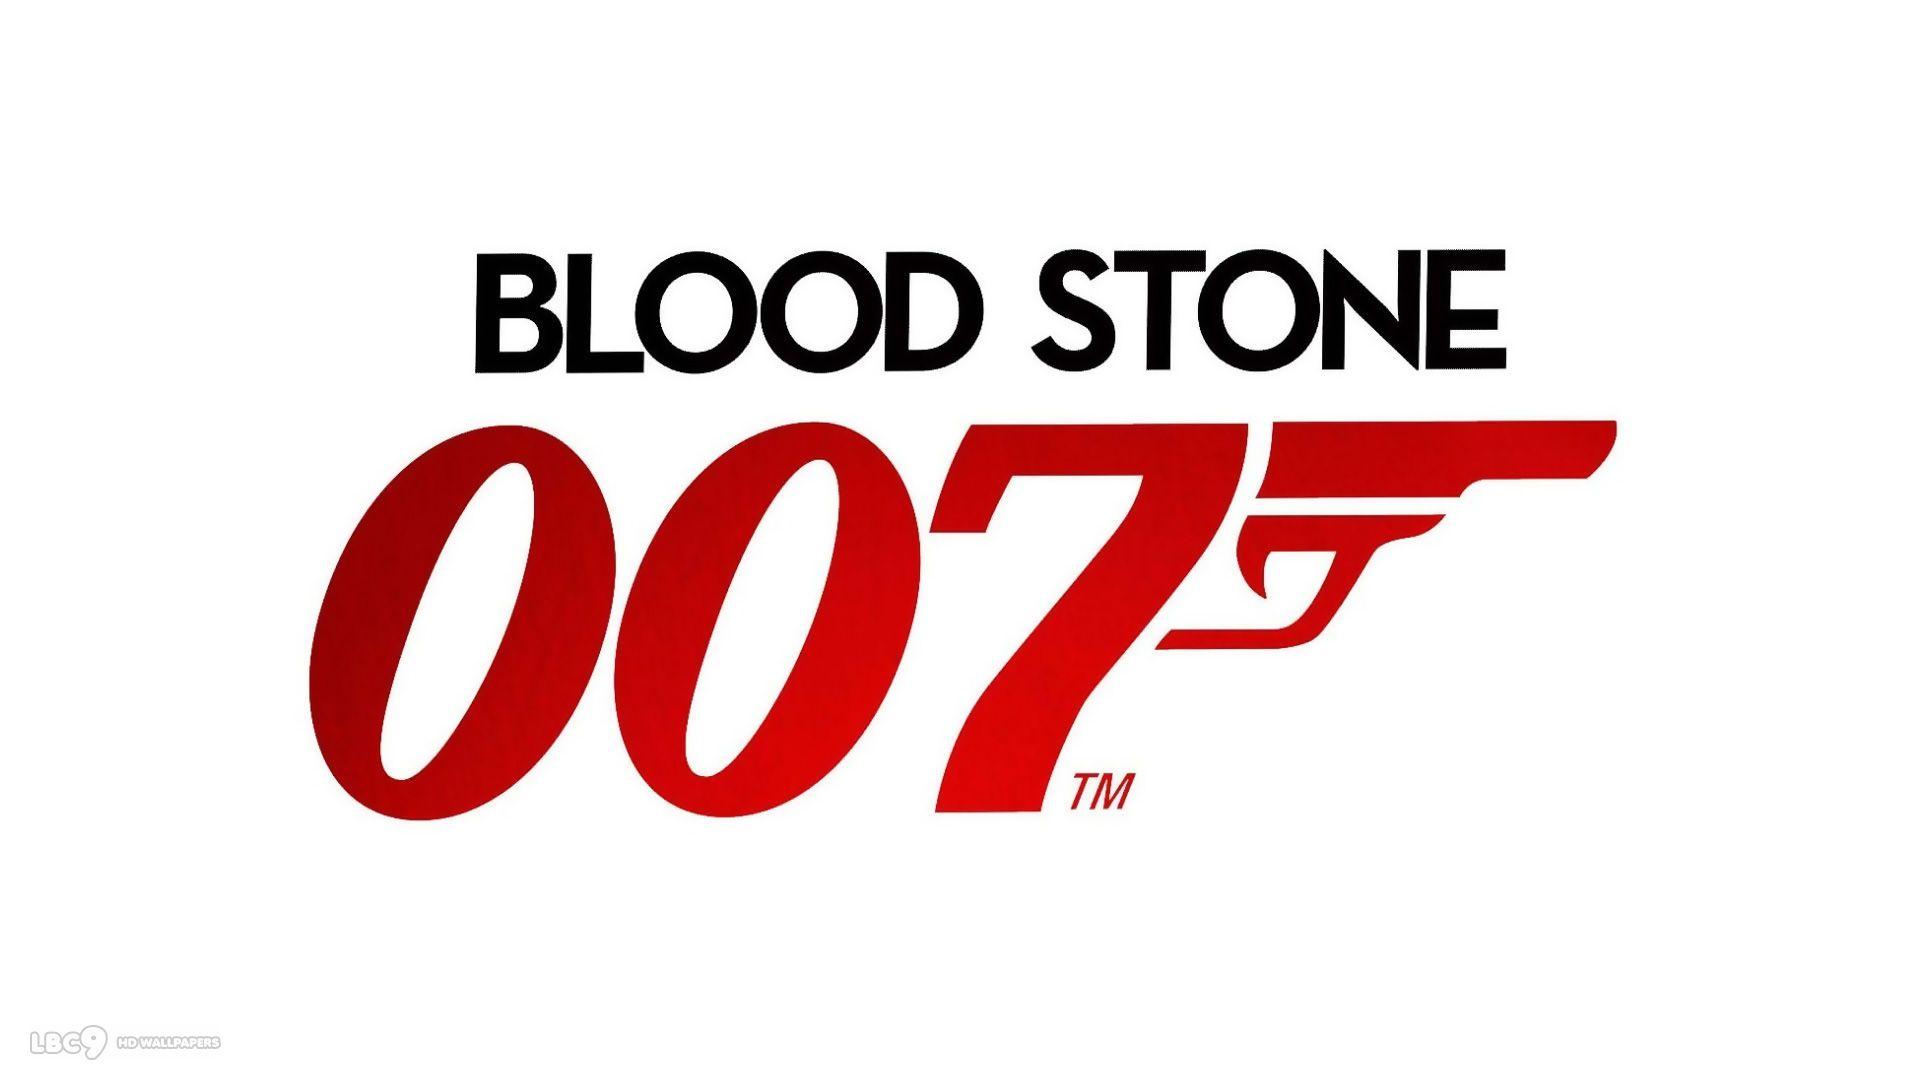 James Bond 007 Blood Stone Wallpaper 3 3. Third Person Shooter